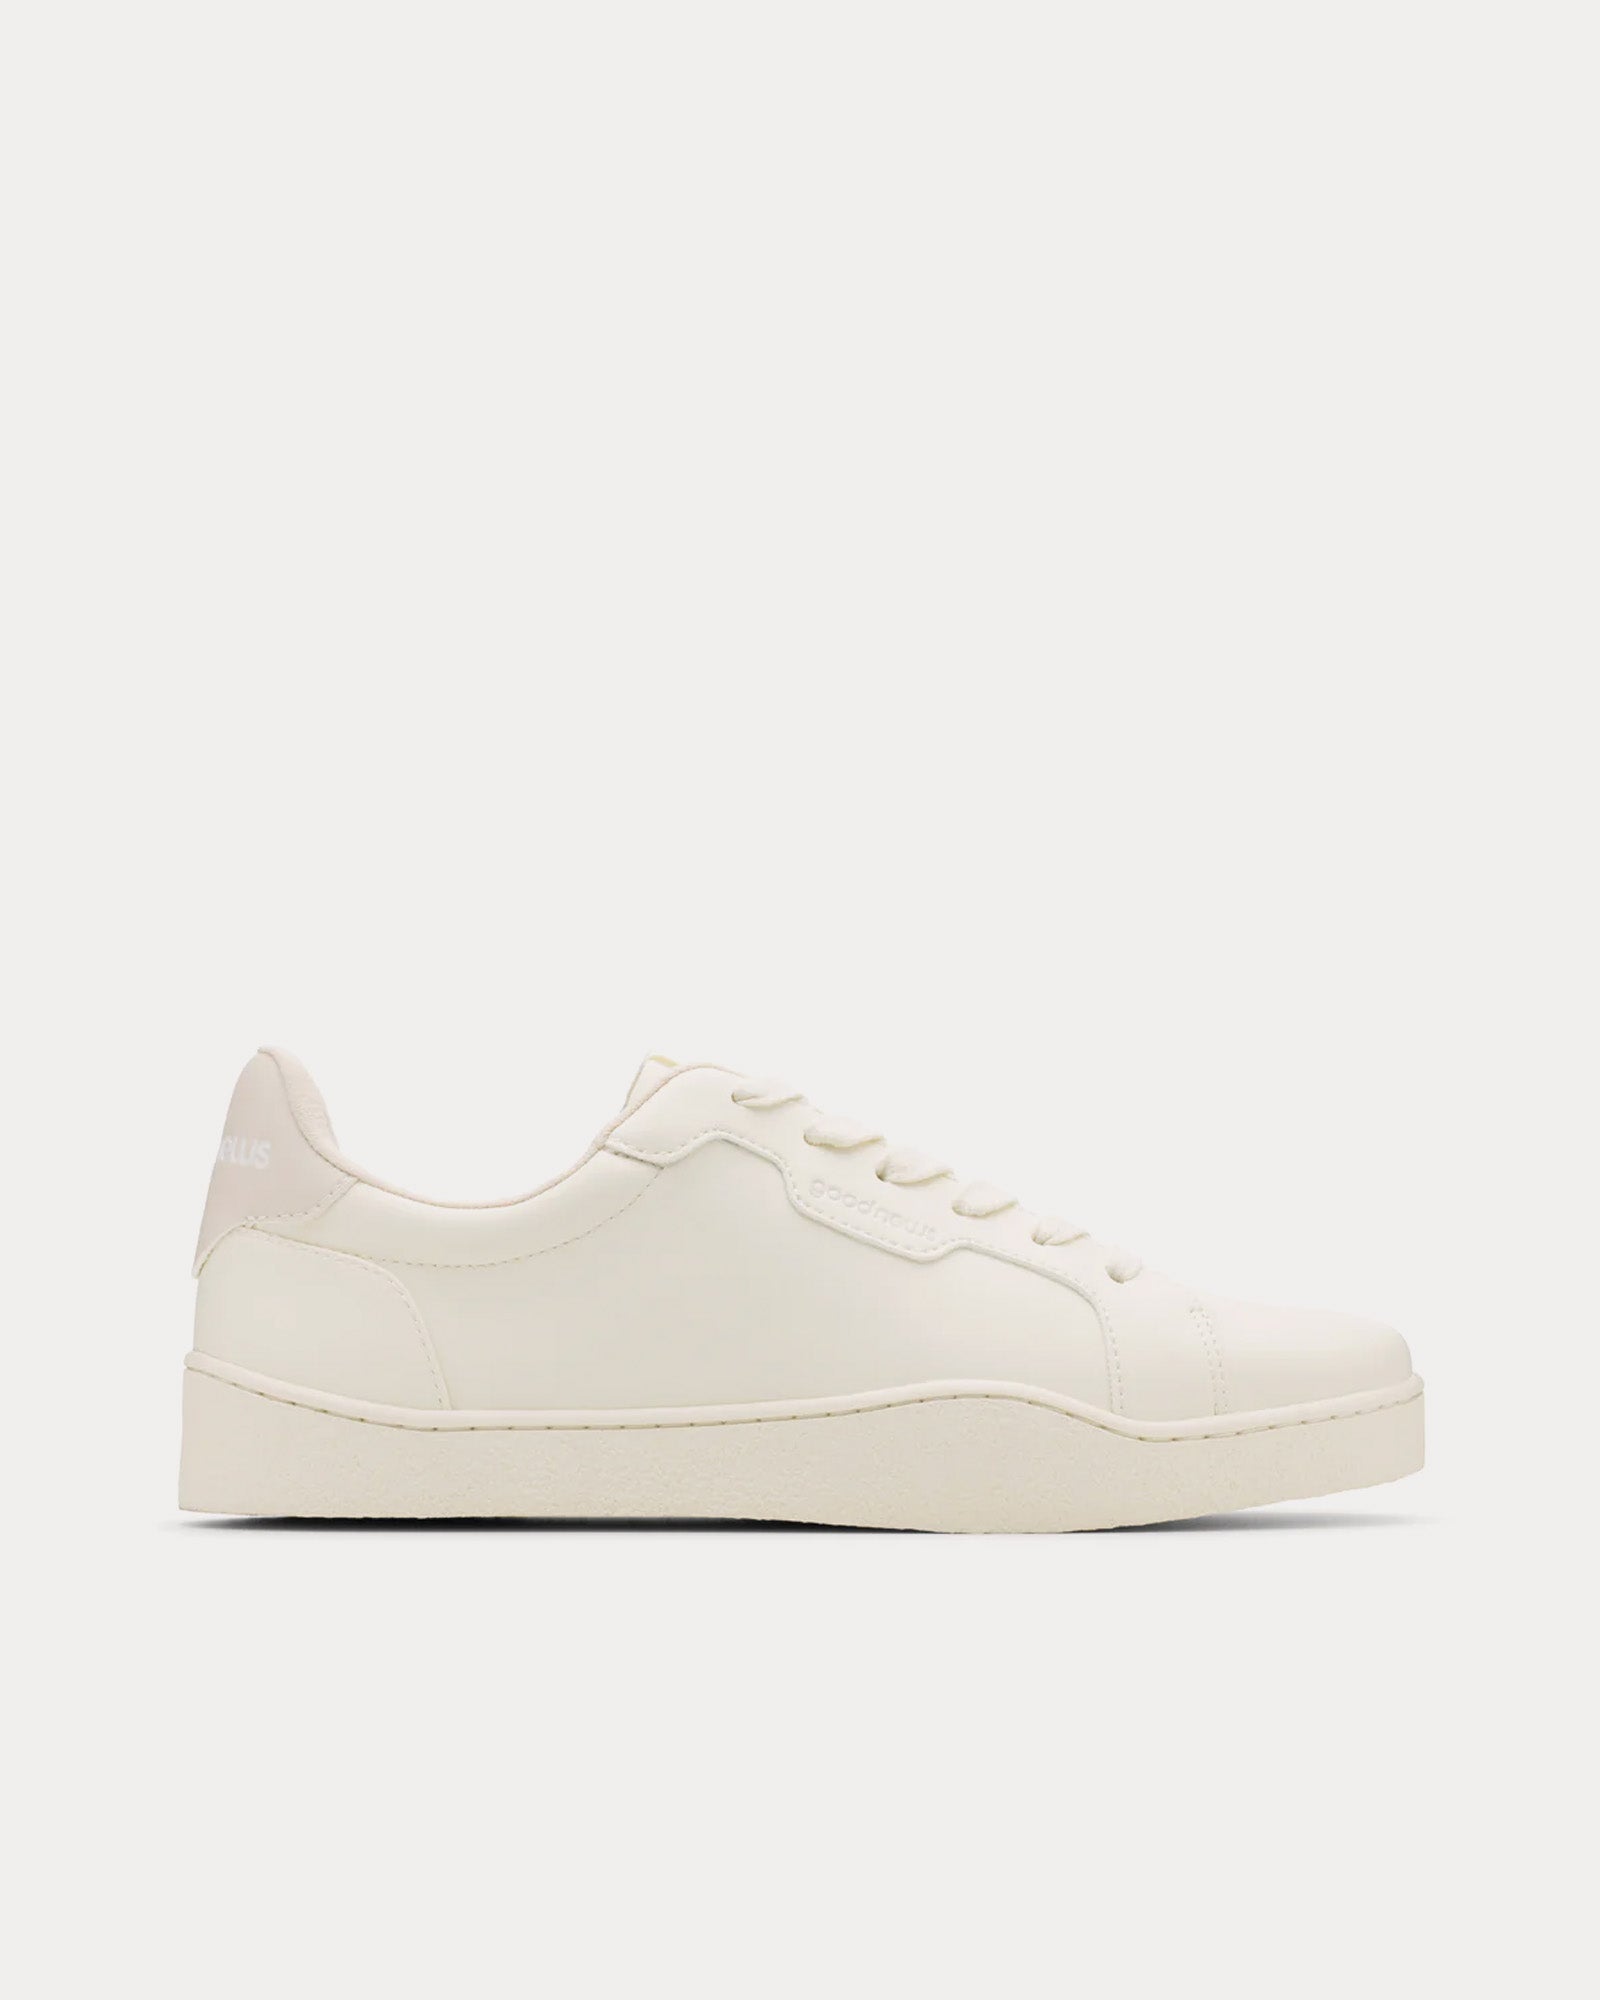 Good News - Venus White Low Top Sneakers